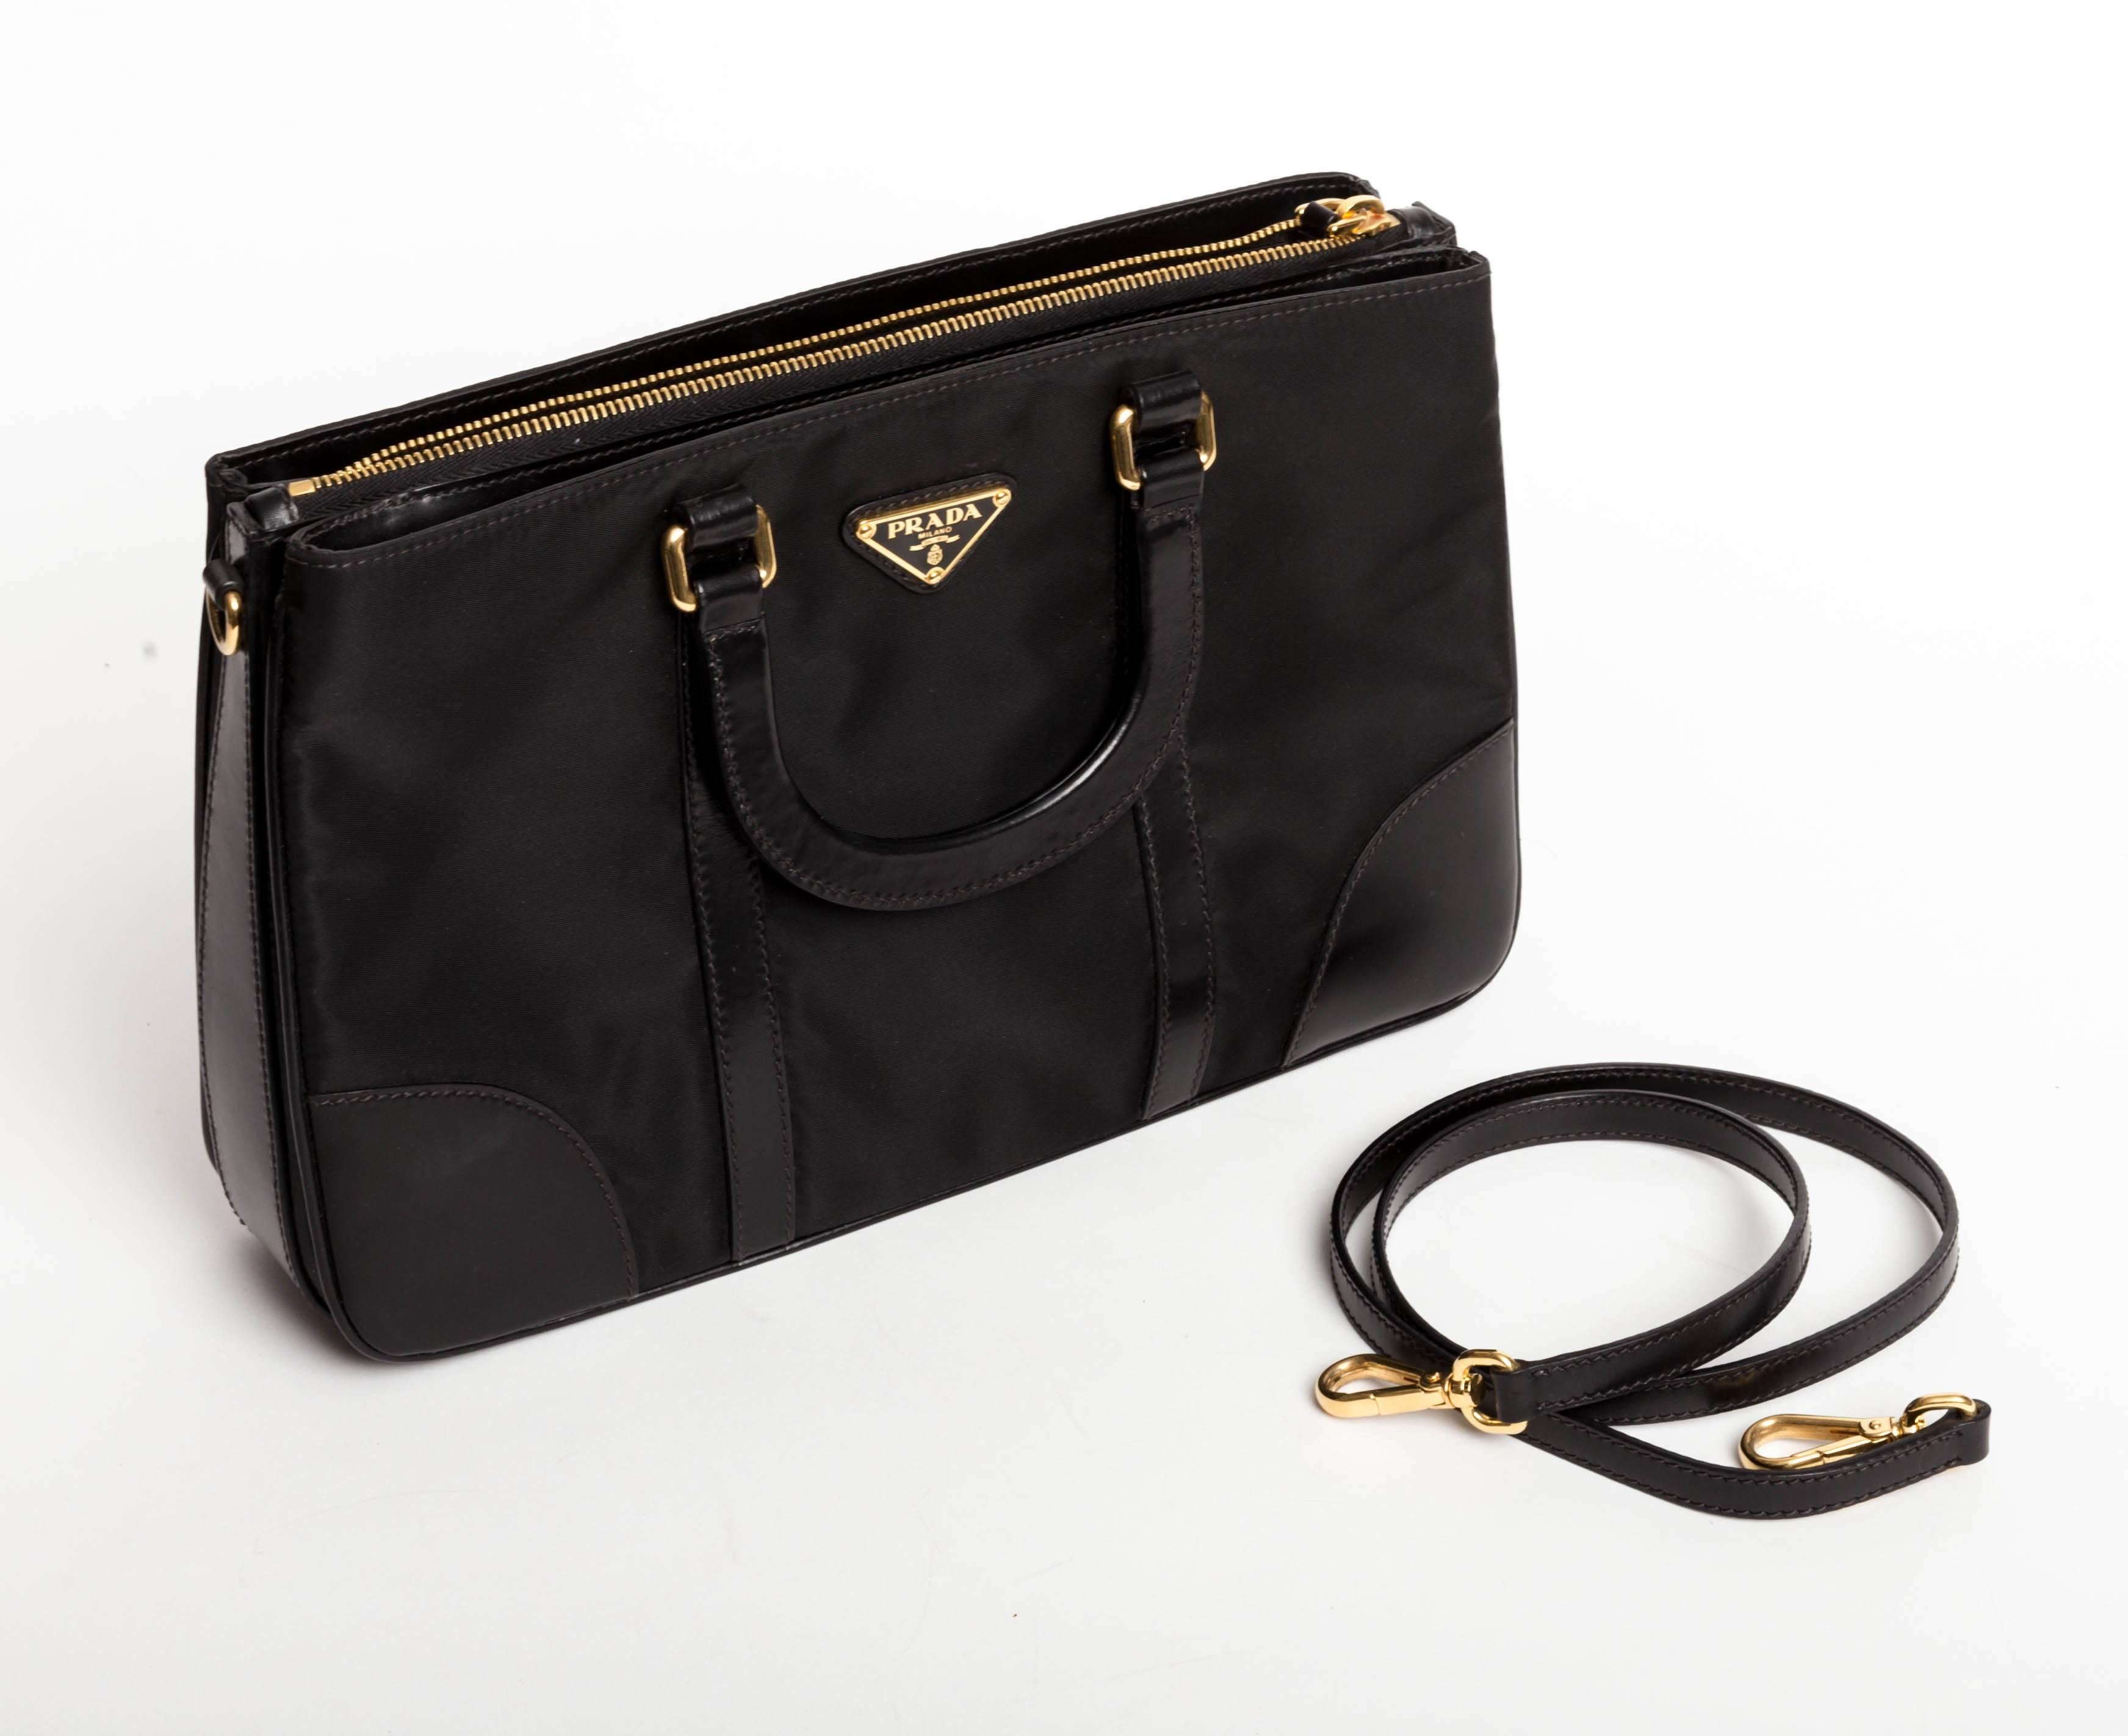 Prada Nylon Bag with Black Leather Top Handles and Strap 2